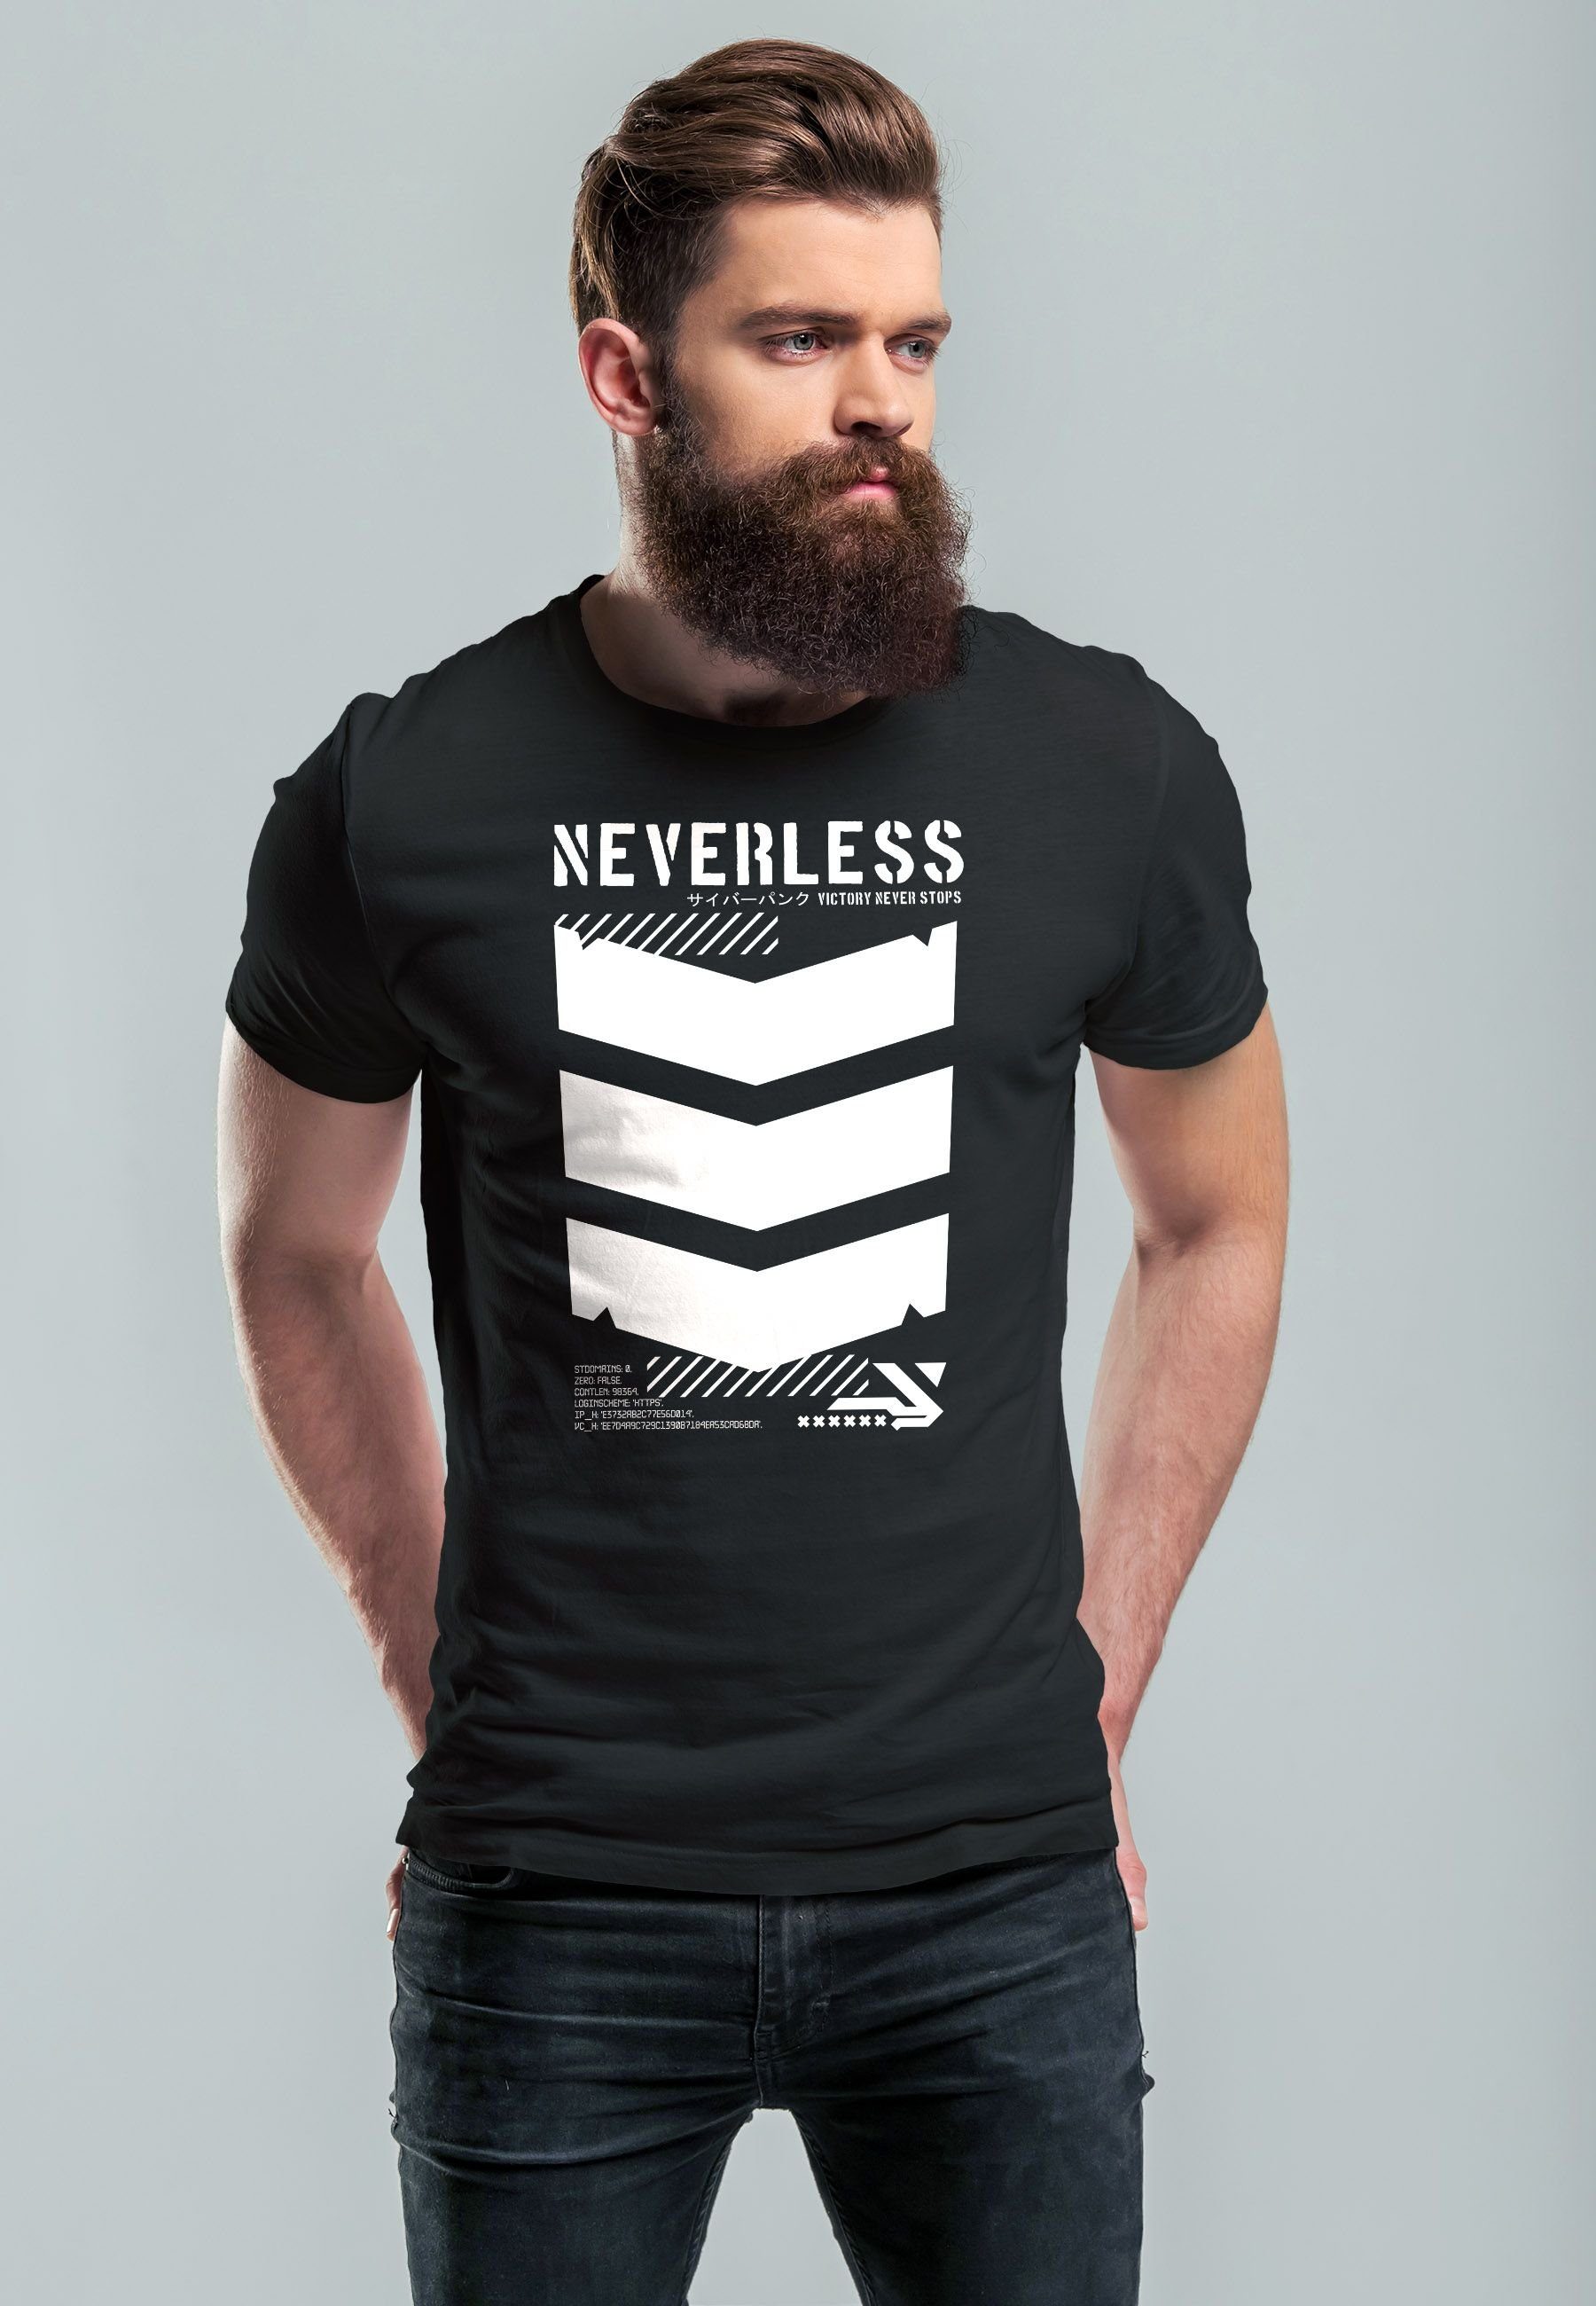 Neverless schwarz mit Military Motive Trend Streetstyle Print Print-Shirt Fas Herren Japanese Techwear T-Shirt